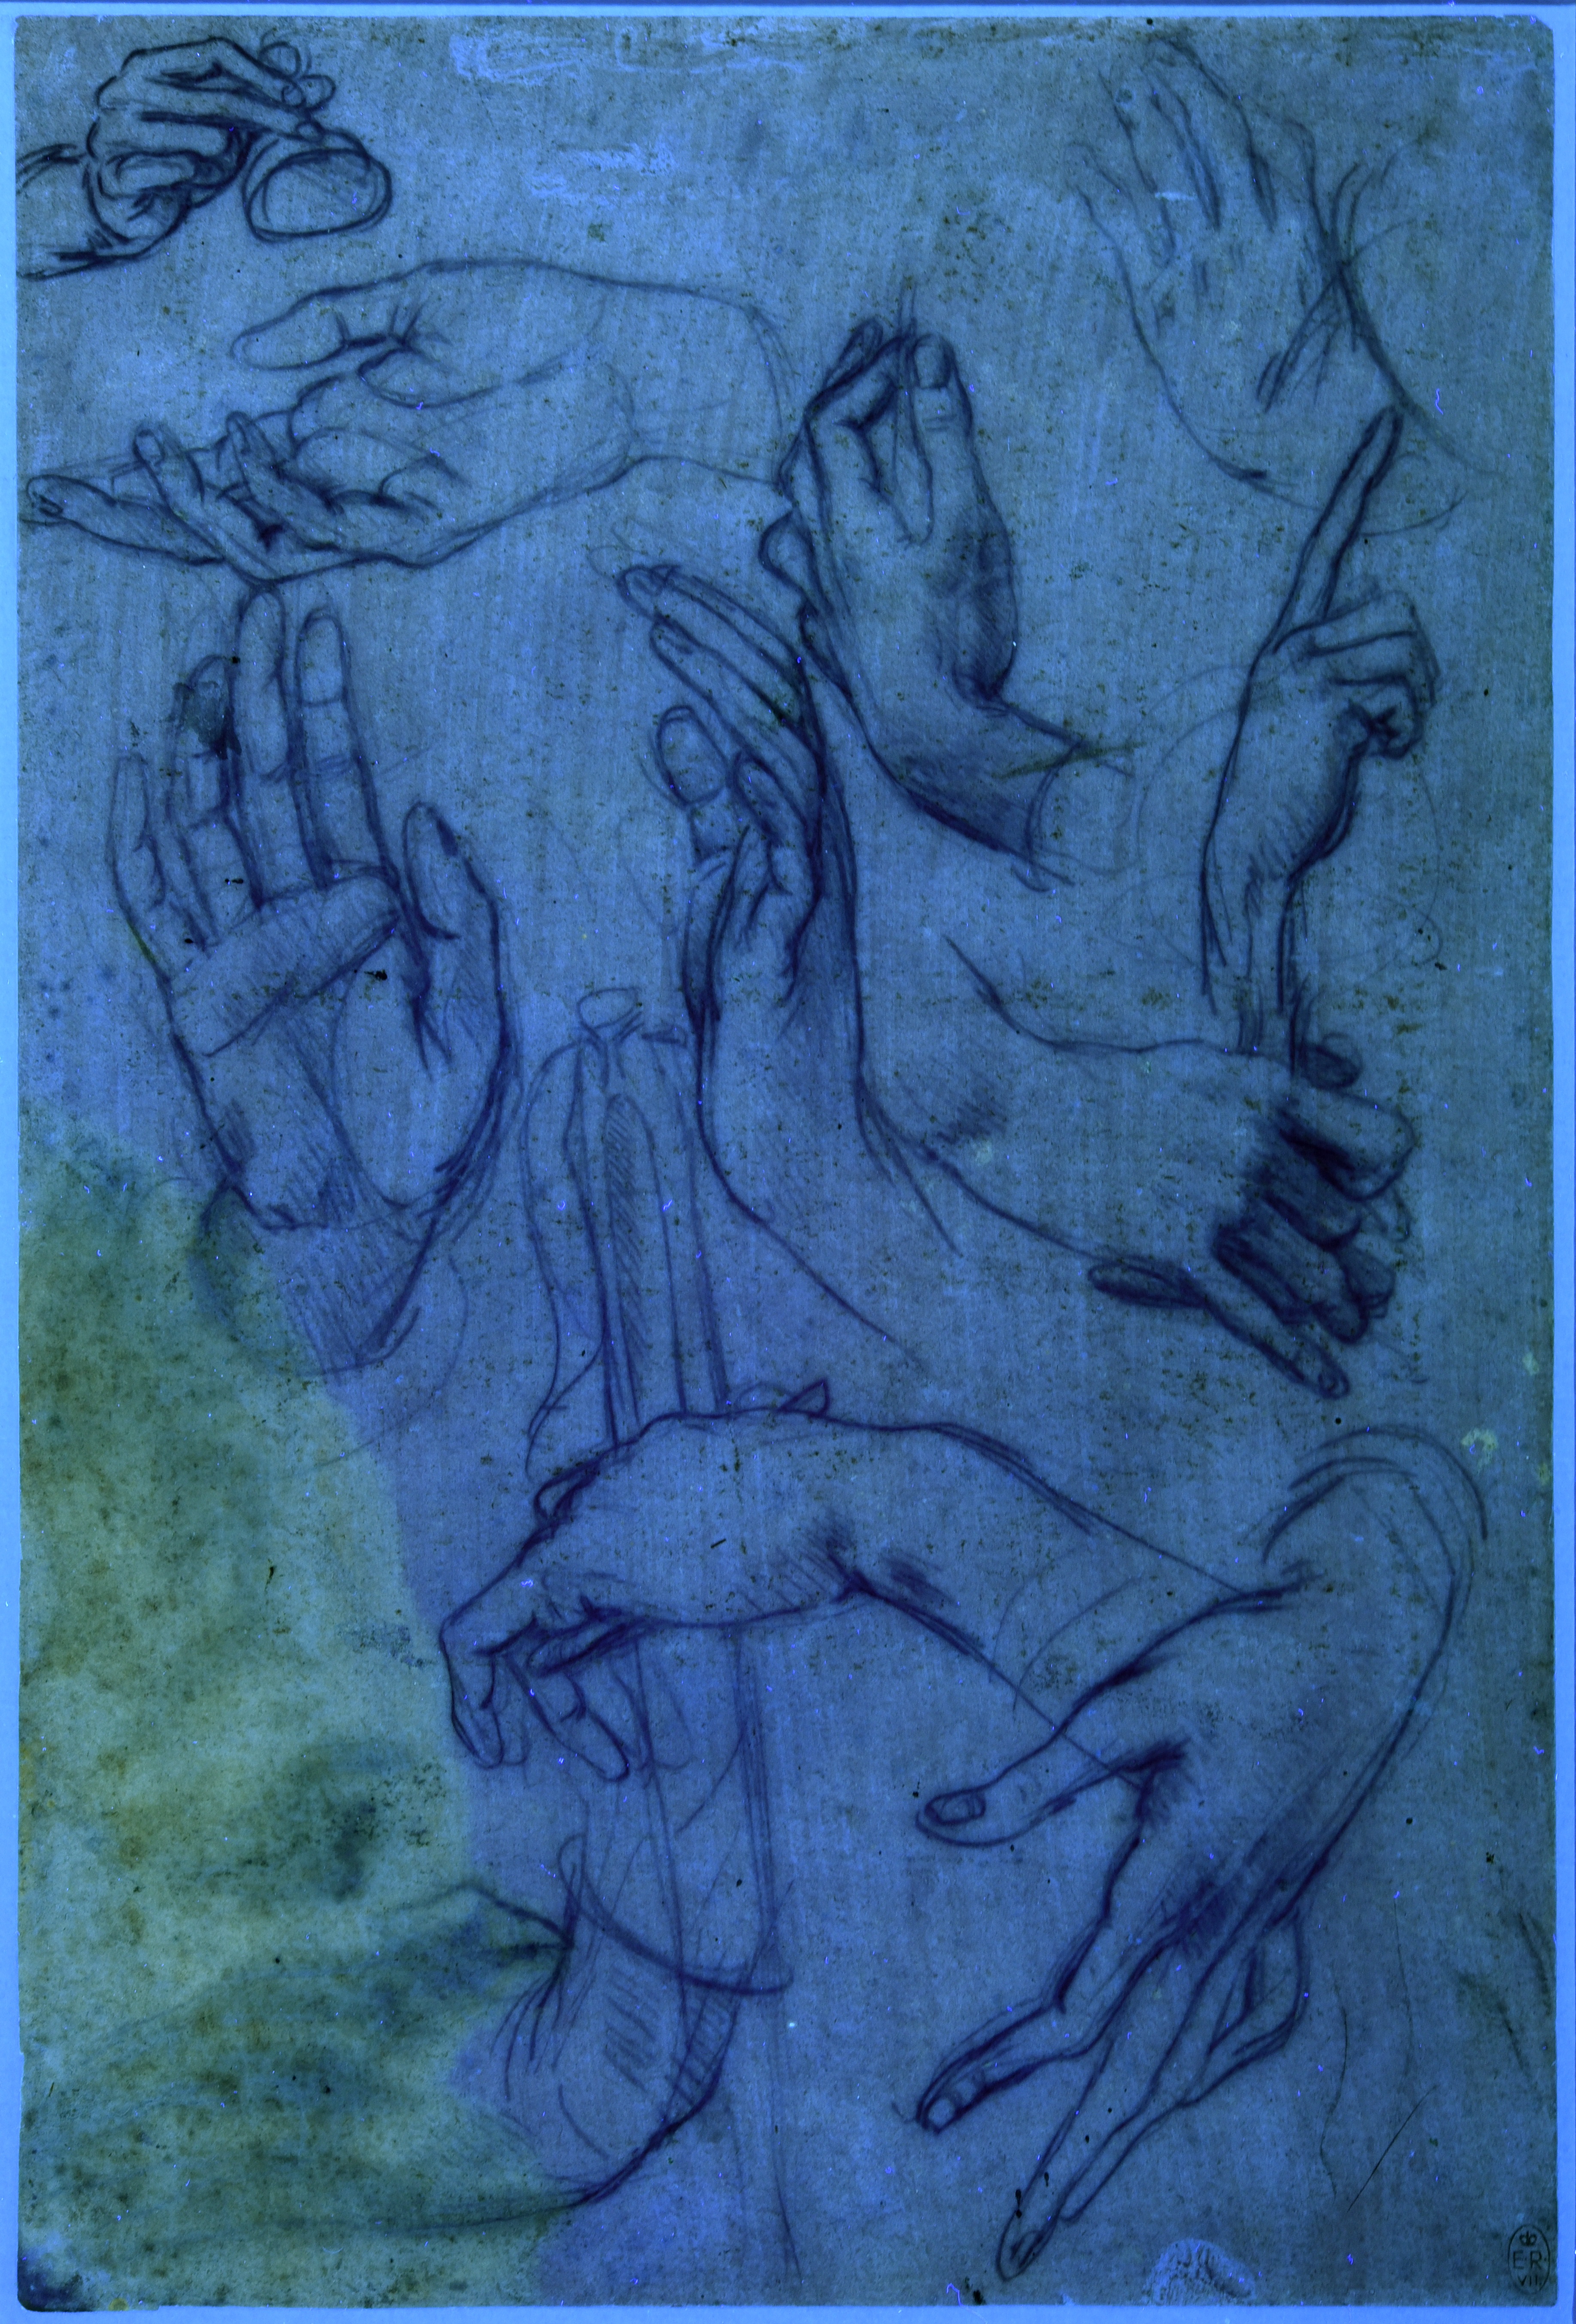 Leonardo da Vinci's 'Studies of hands' under UV light